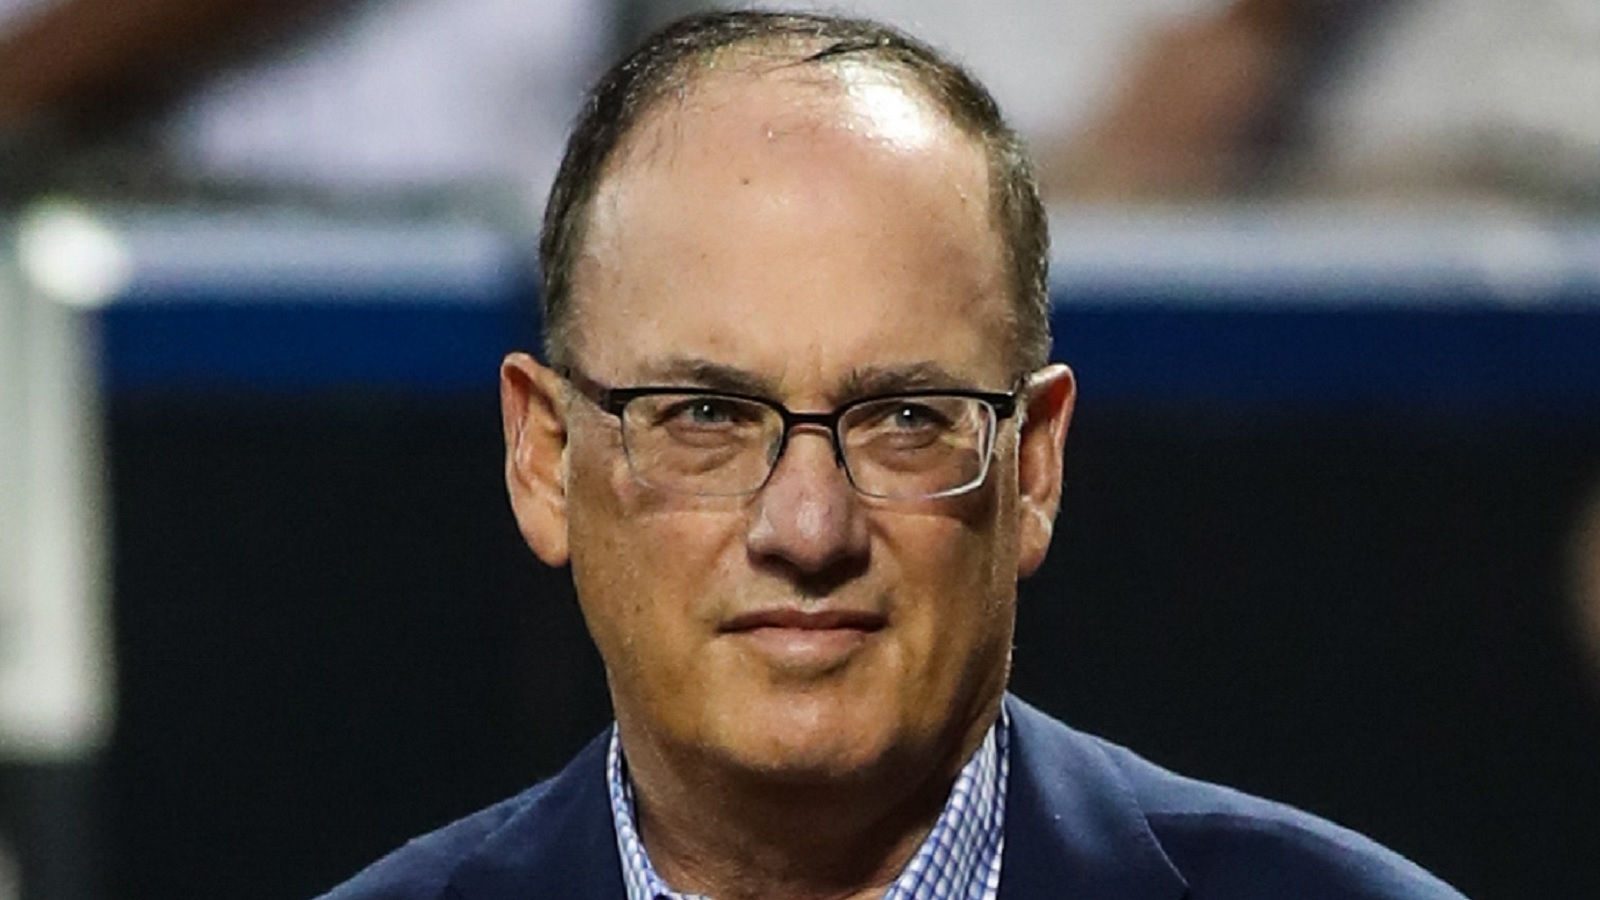 Steve Cohen plans on notable change to Mets' jersey sponsor